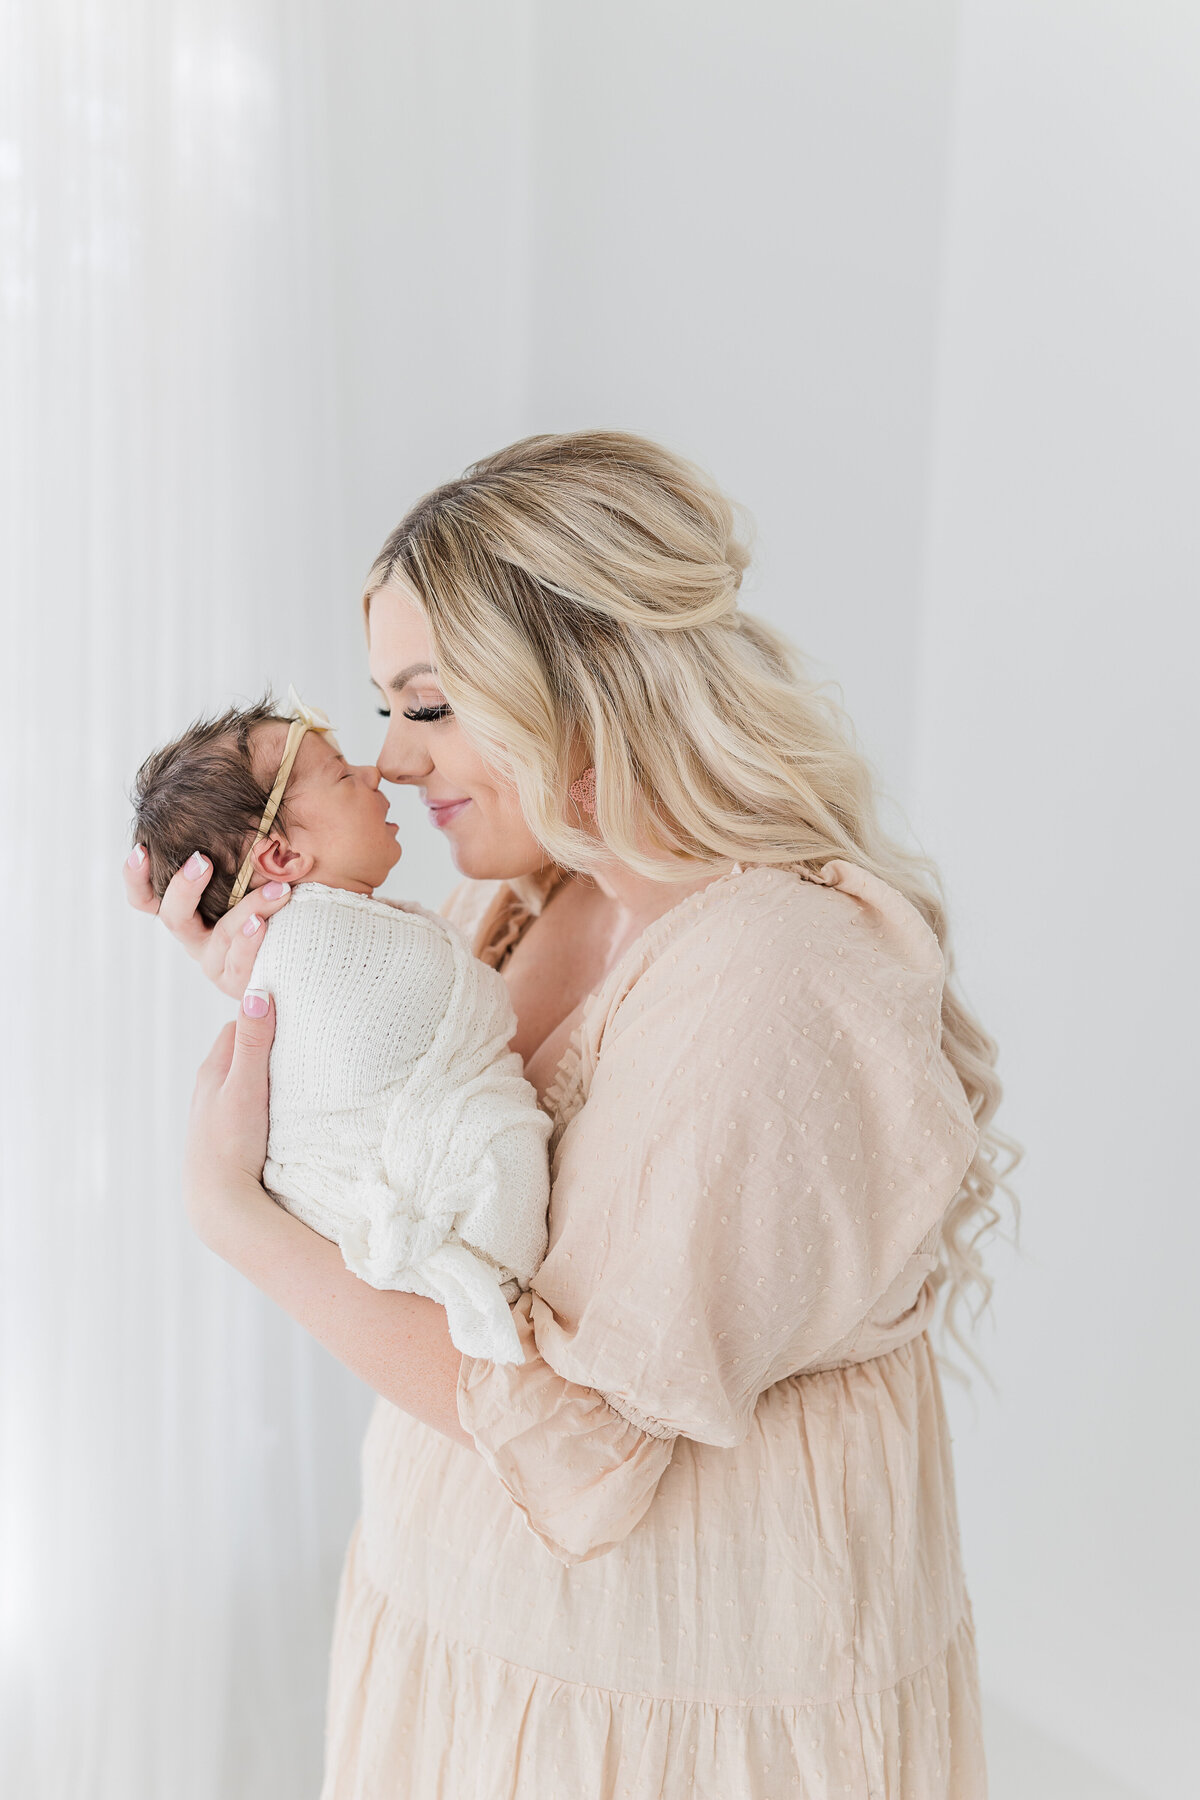 Folsom newborn photographer capturing mother holding newborn baby girl.